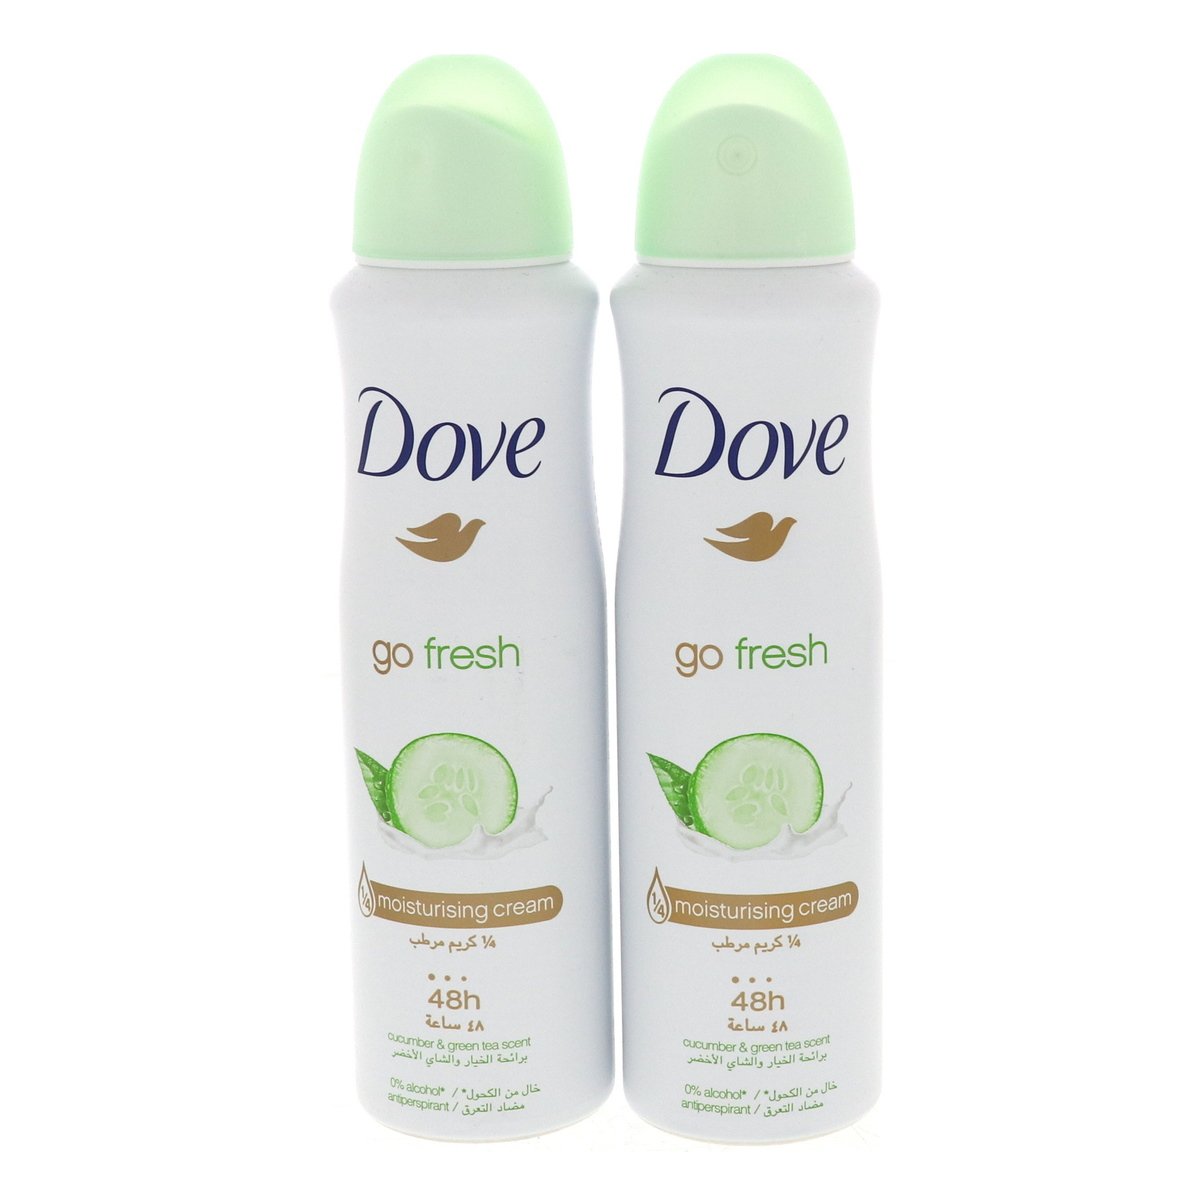 Dove Antiperspirant Spray Assorted Value Pack 2 x 150 ml